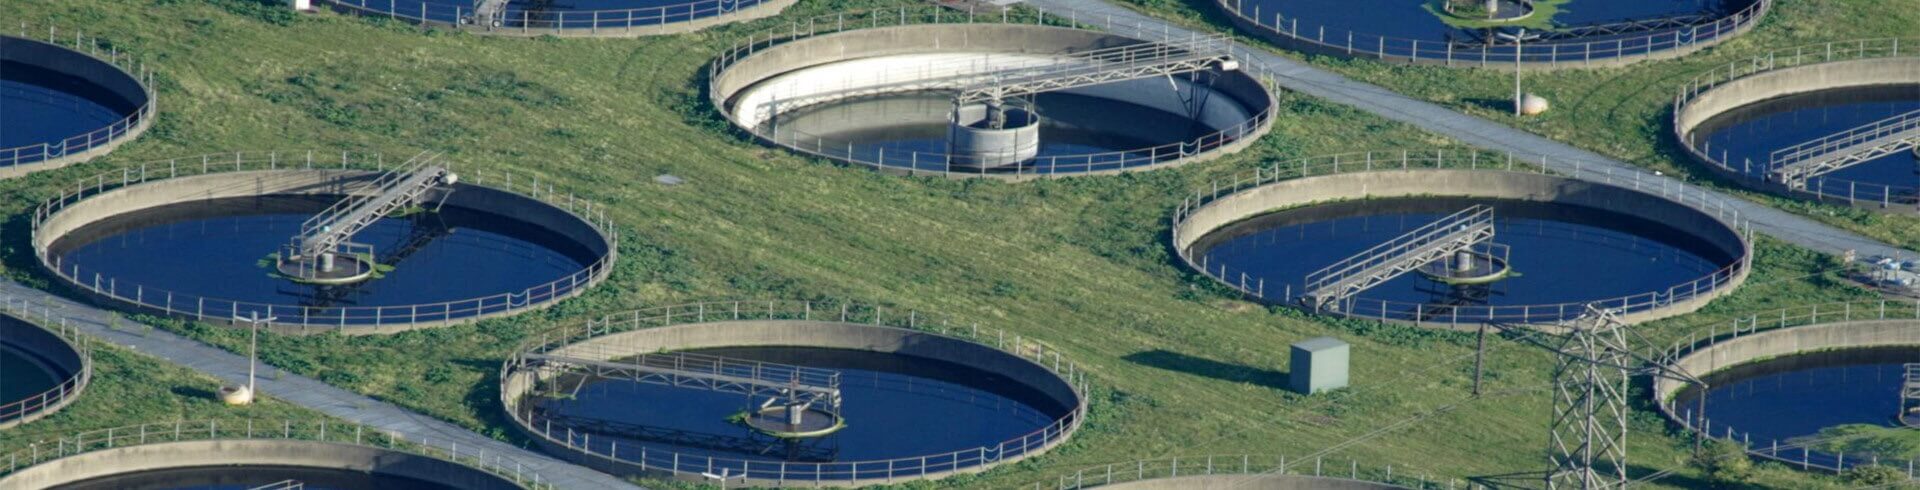 MAN Cummins 1000kW 1MW waste water biogas power plant ETTES POWER